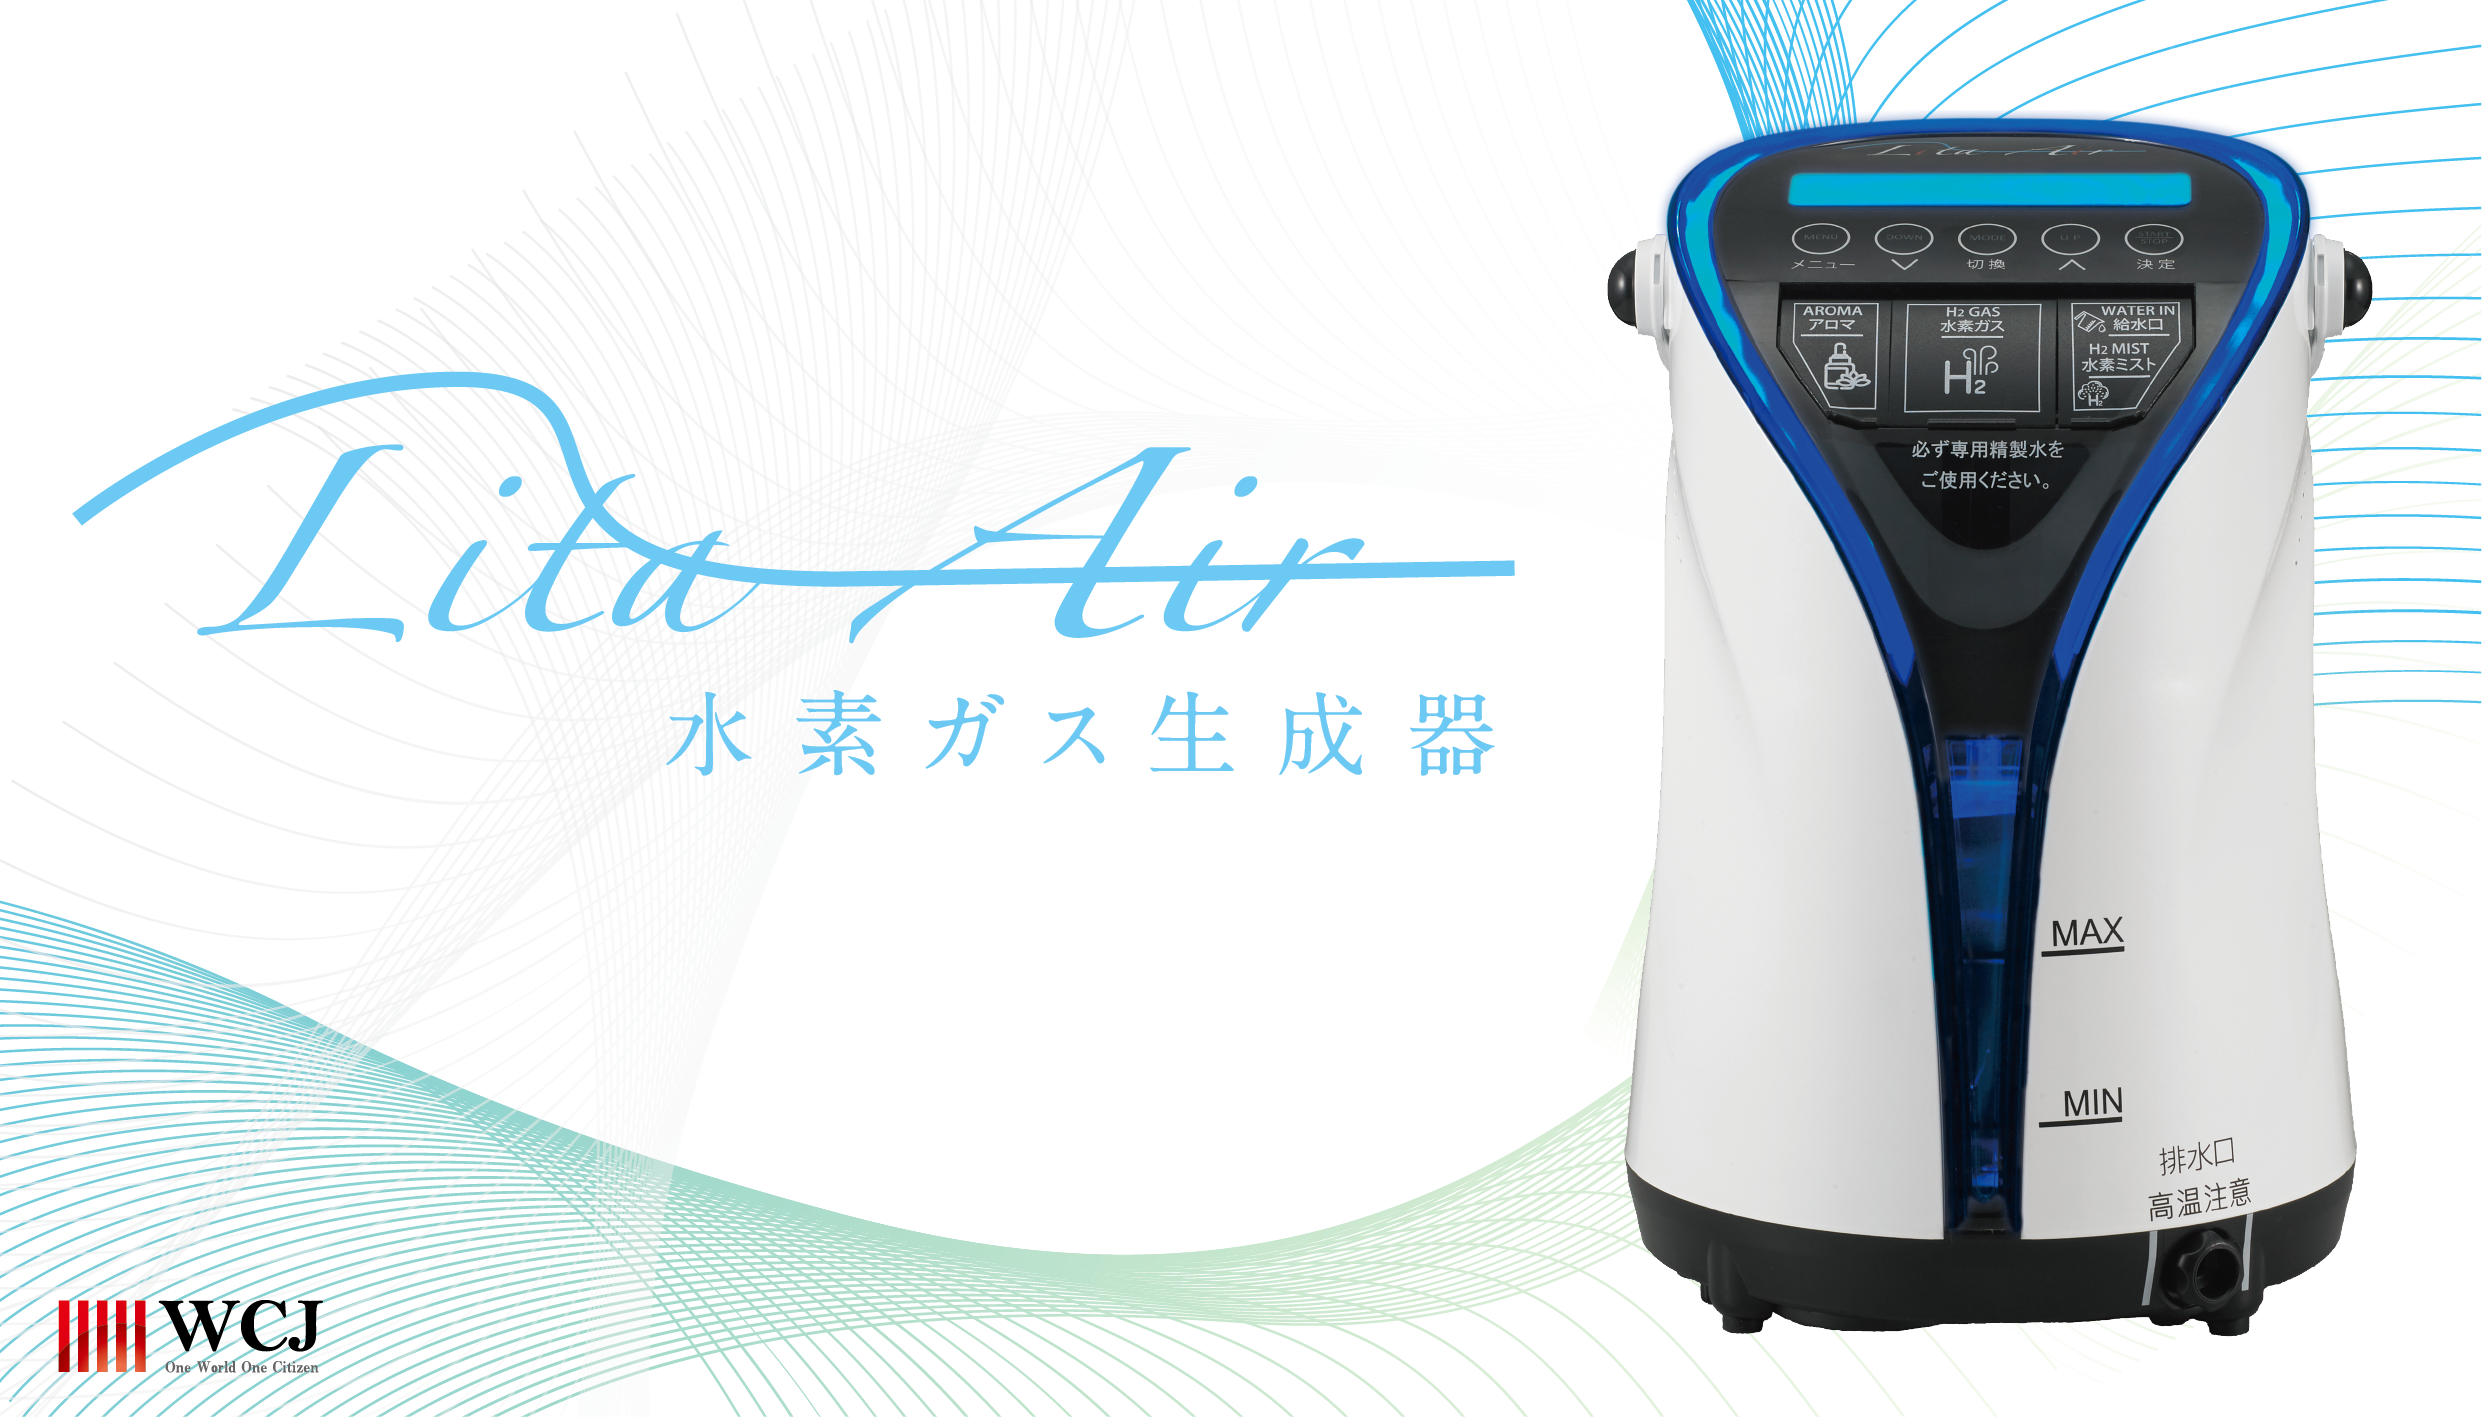 Lita Air リタエアー　水素ガス生成器ミストパーツ3種類